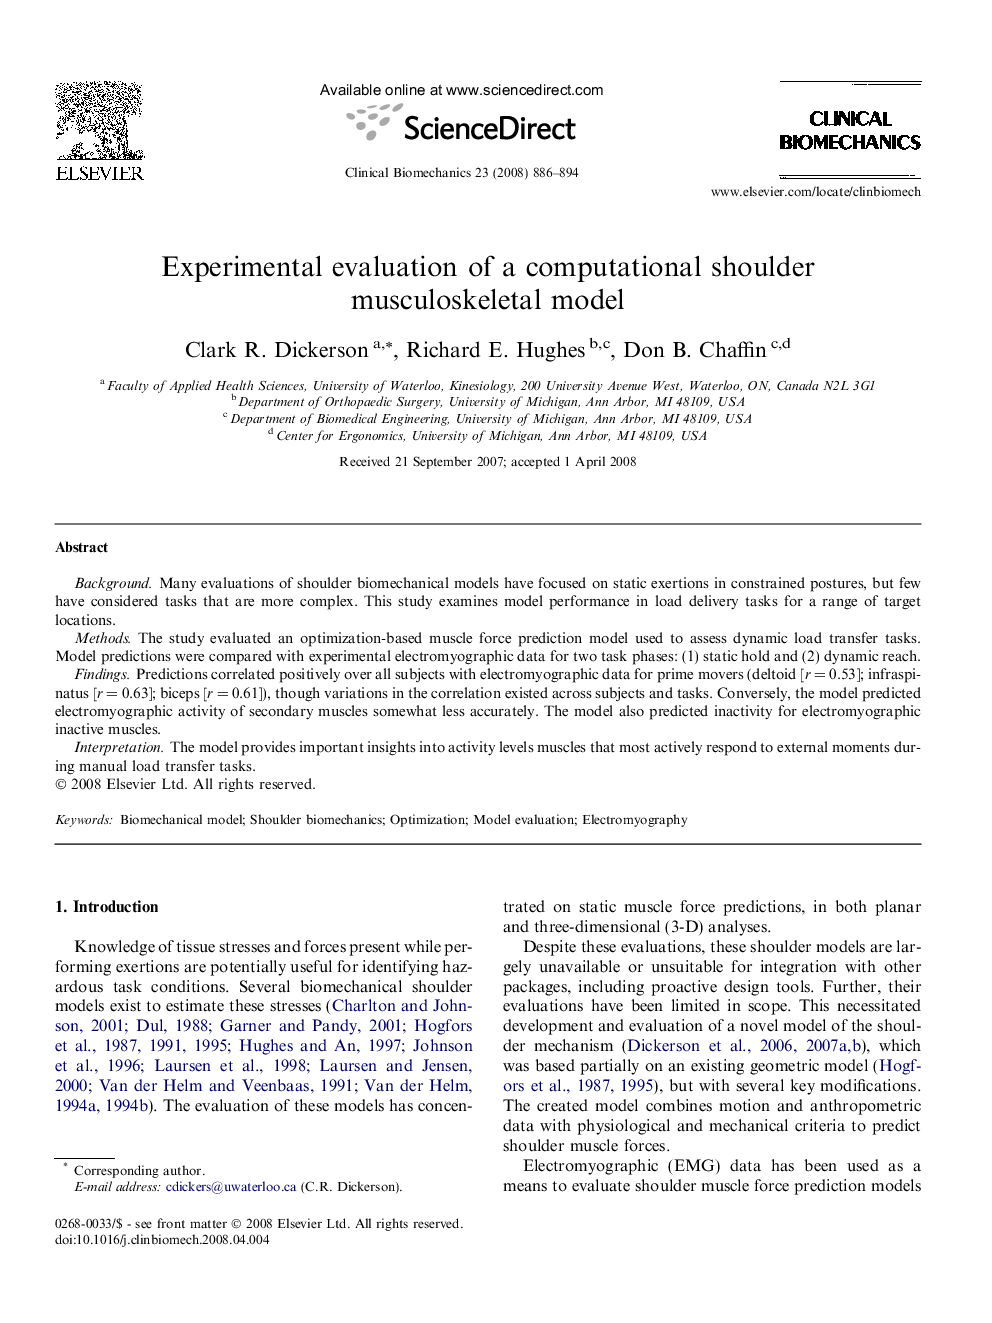 Experimental evaluation of a computational shoulder musculoskeletal model